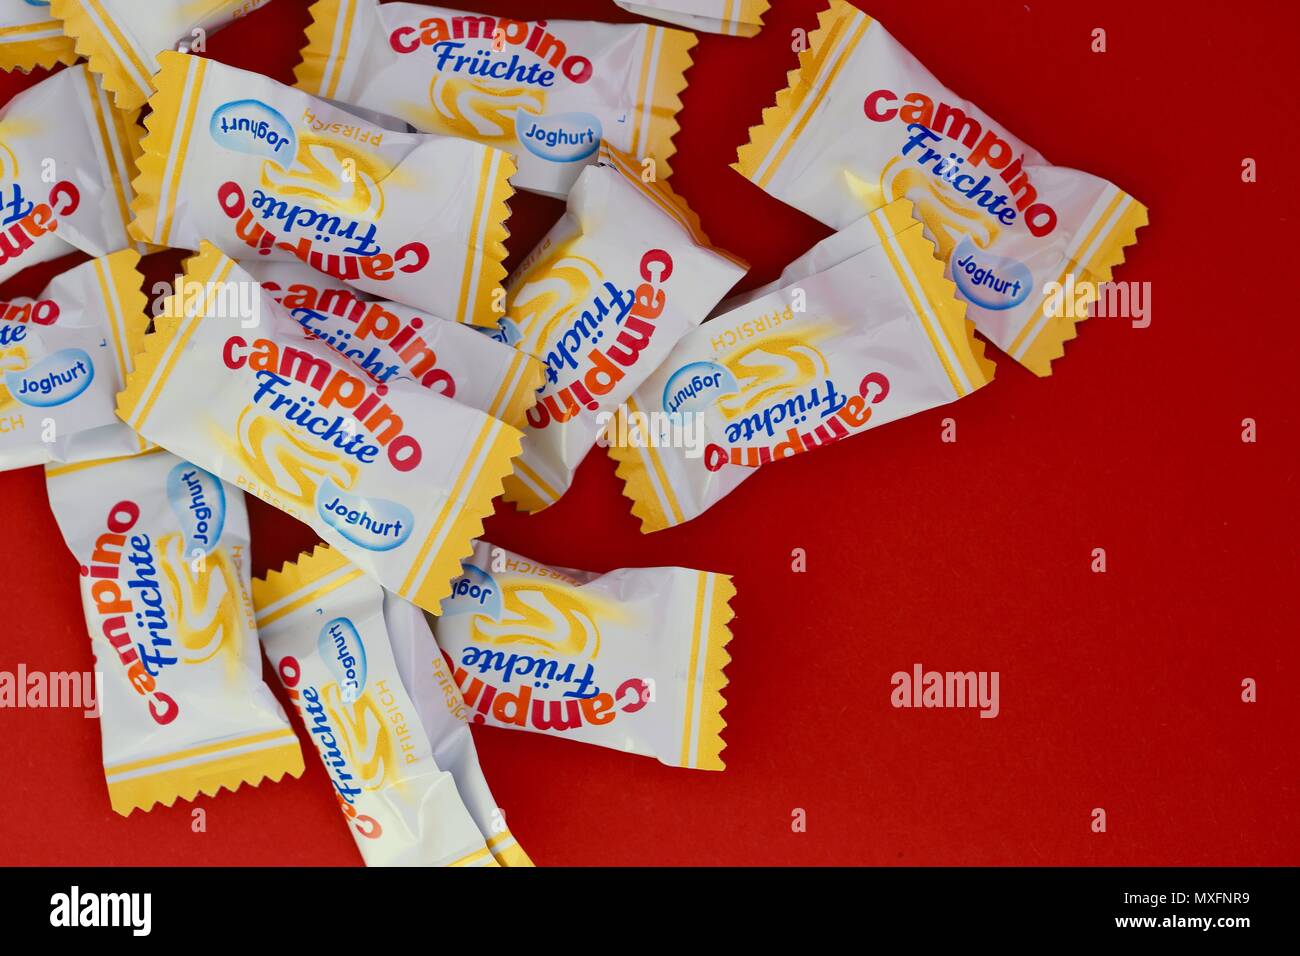 Campino joghurt bonbons -Fotos und -Bildmaterial in hoher Auflösung – Alamy